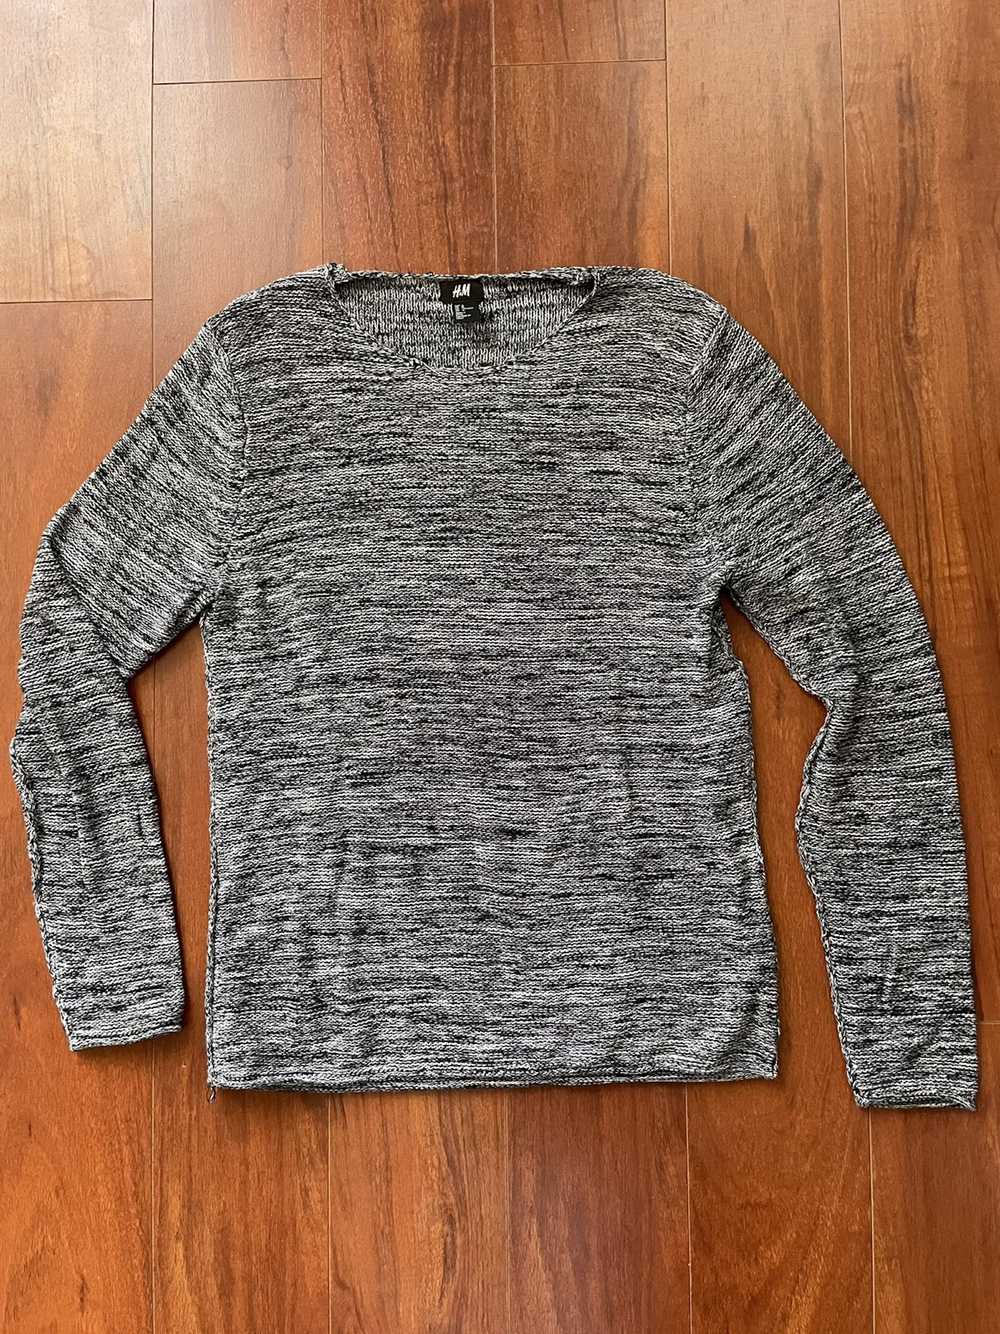 H&M H&M stitch sweater heather grey medium - image 1